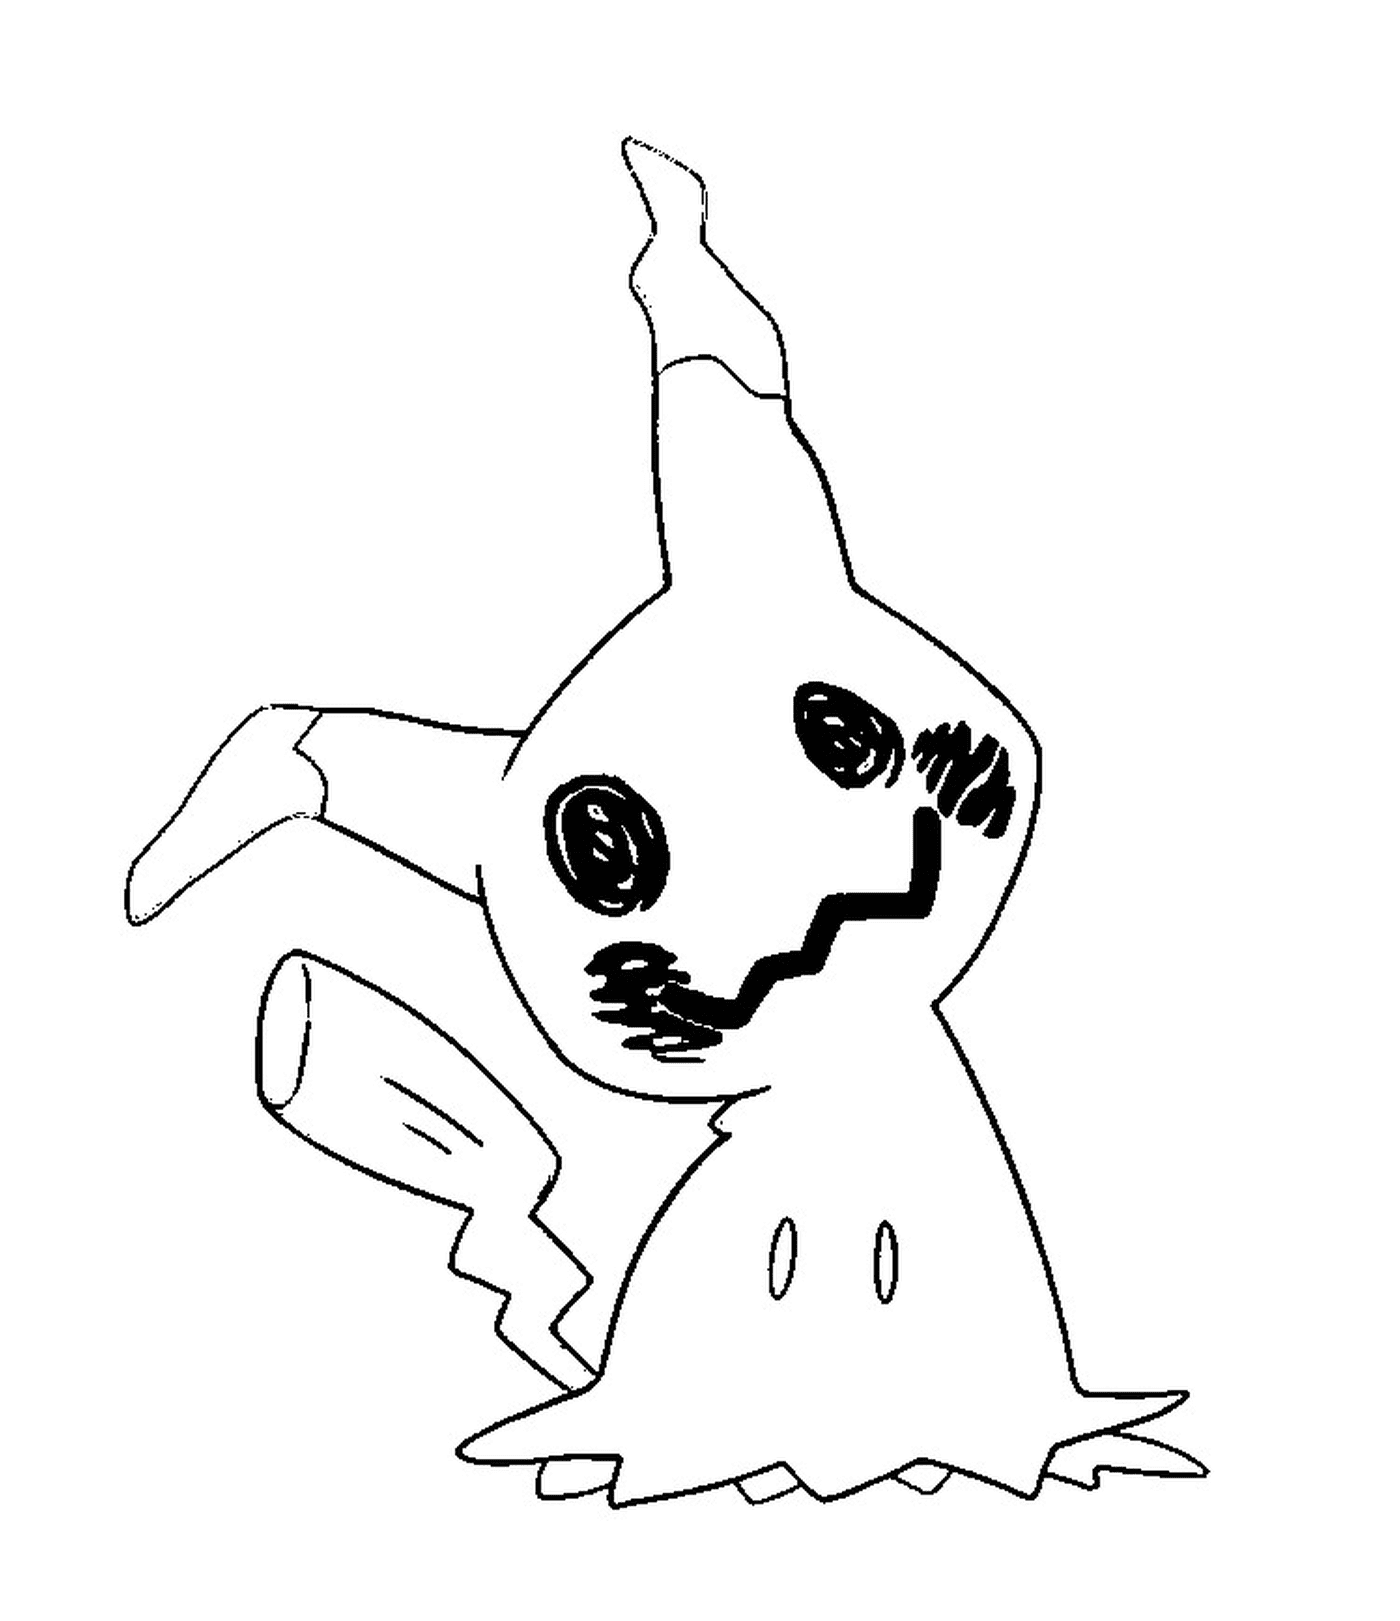  Mimiqui, ein Pikachu 